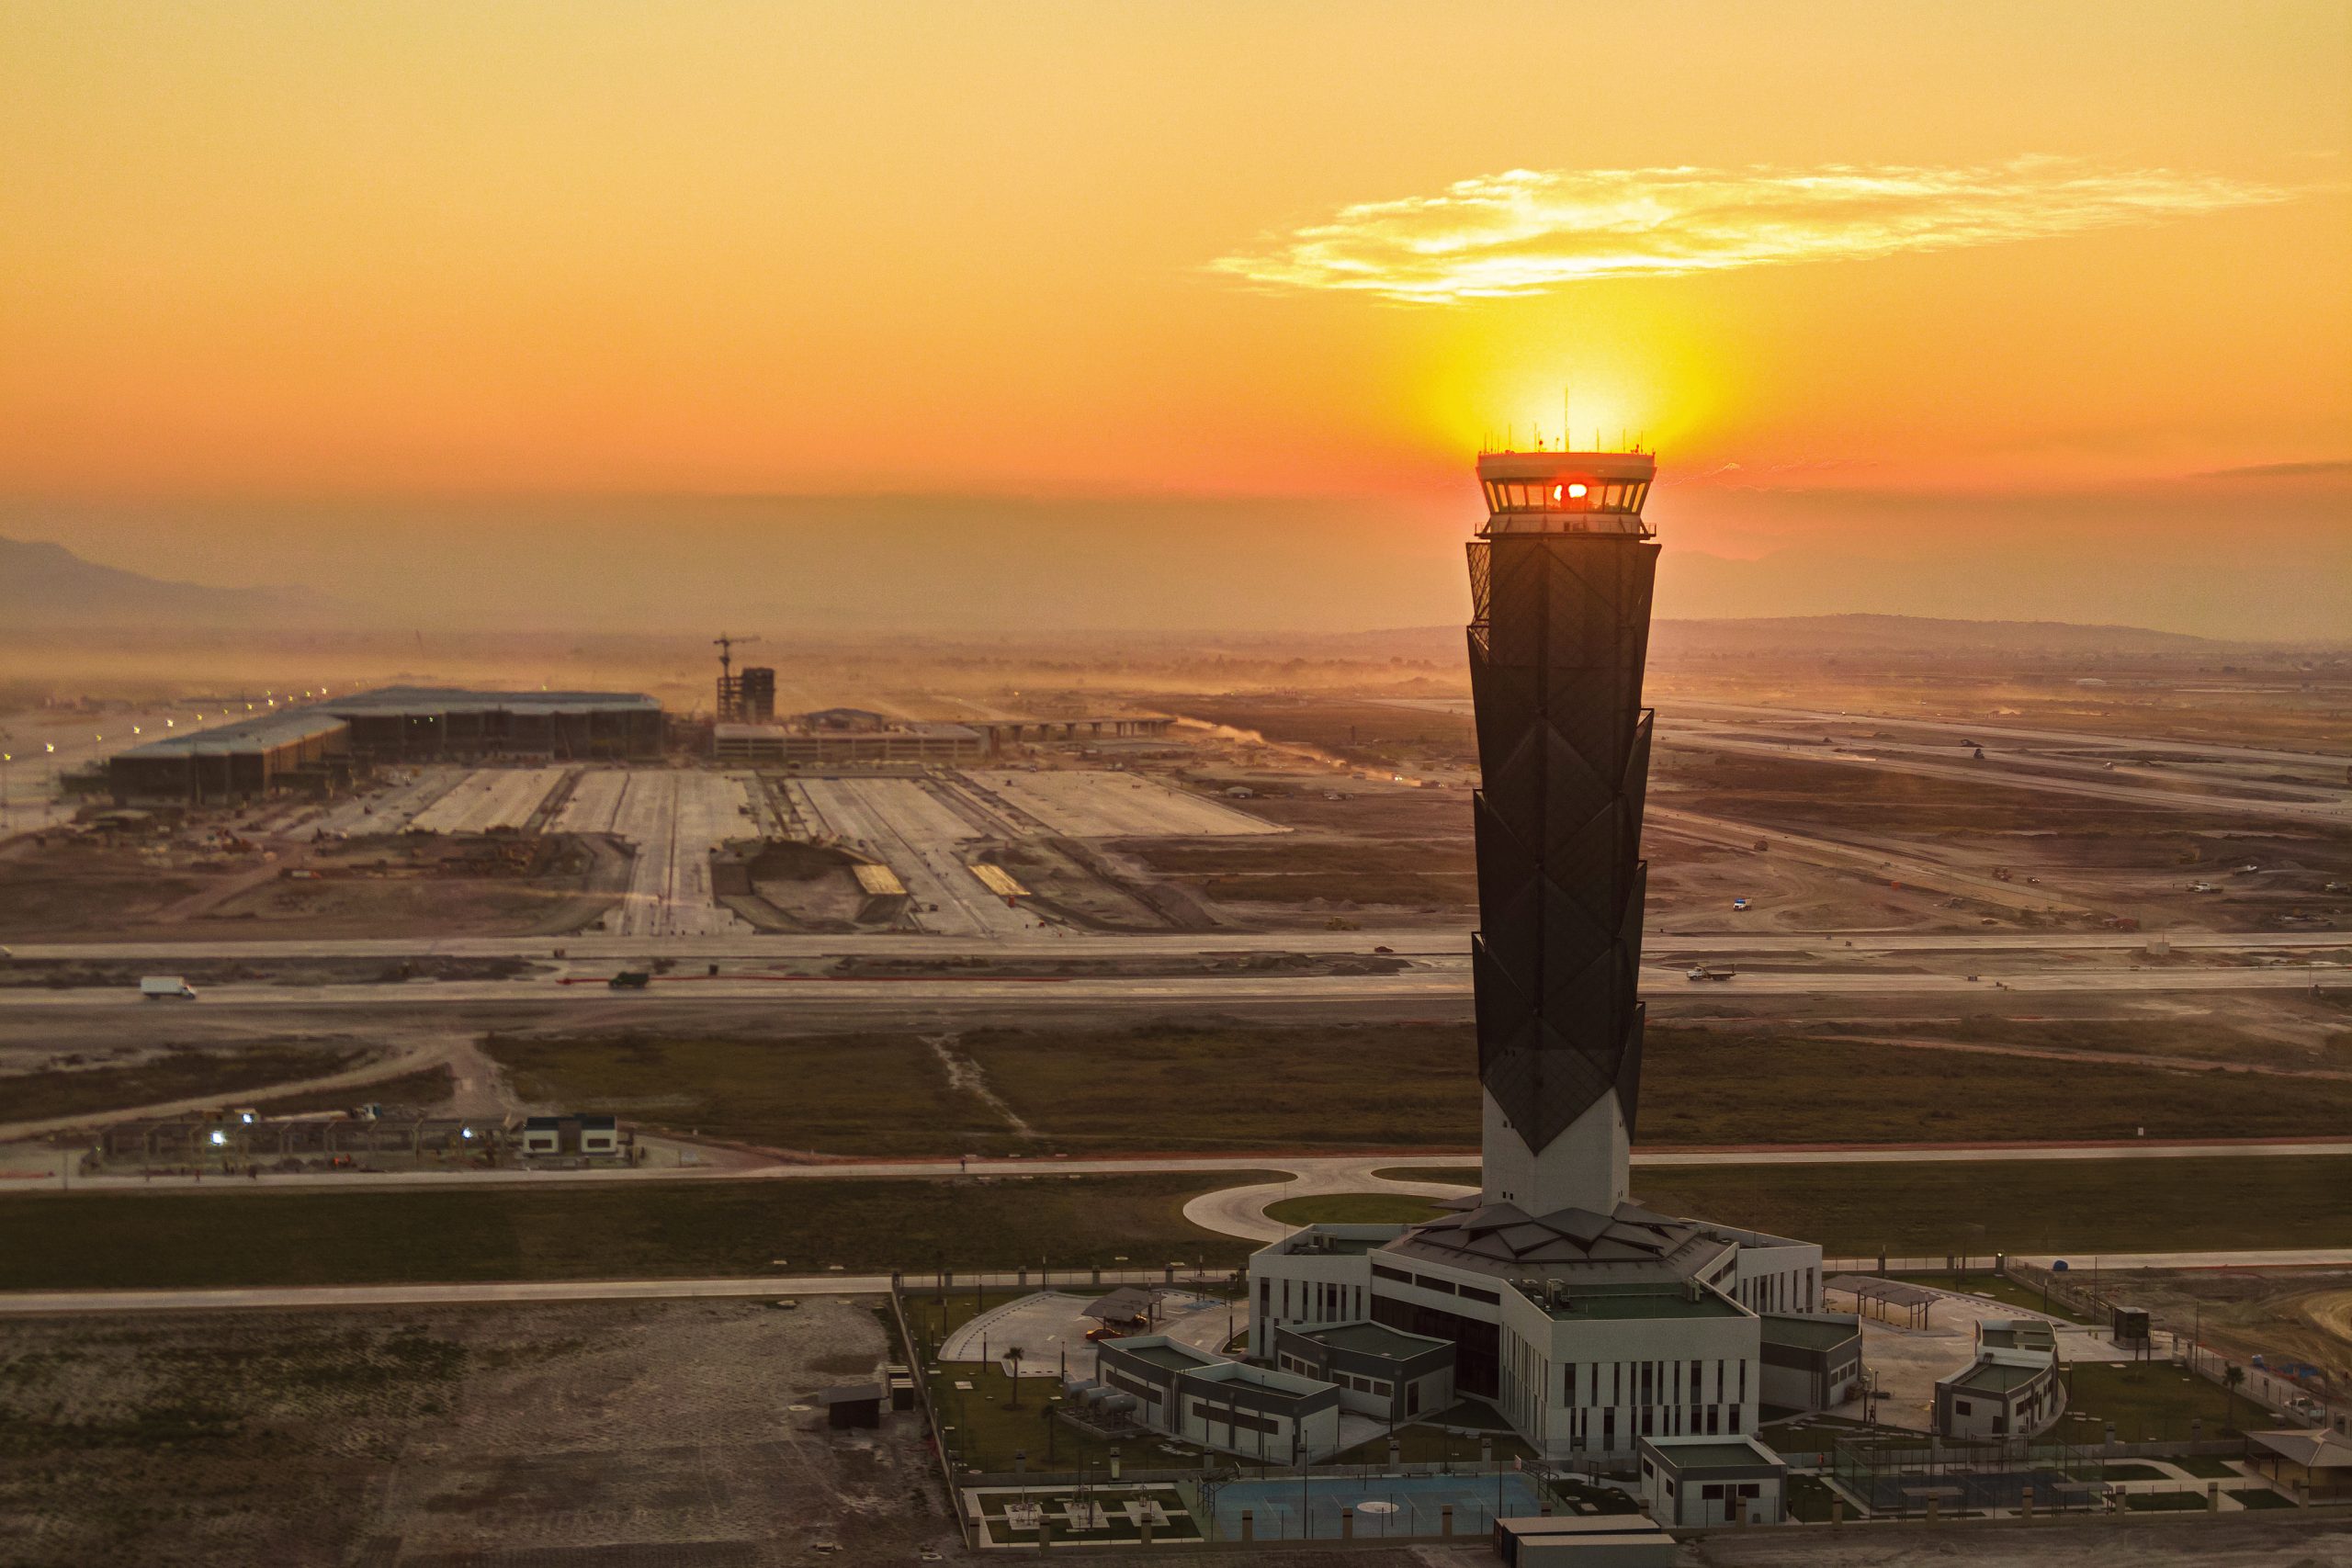 Traffic control tower of AIFA MEX airport